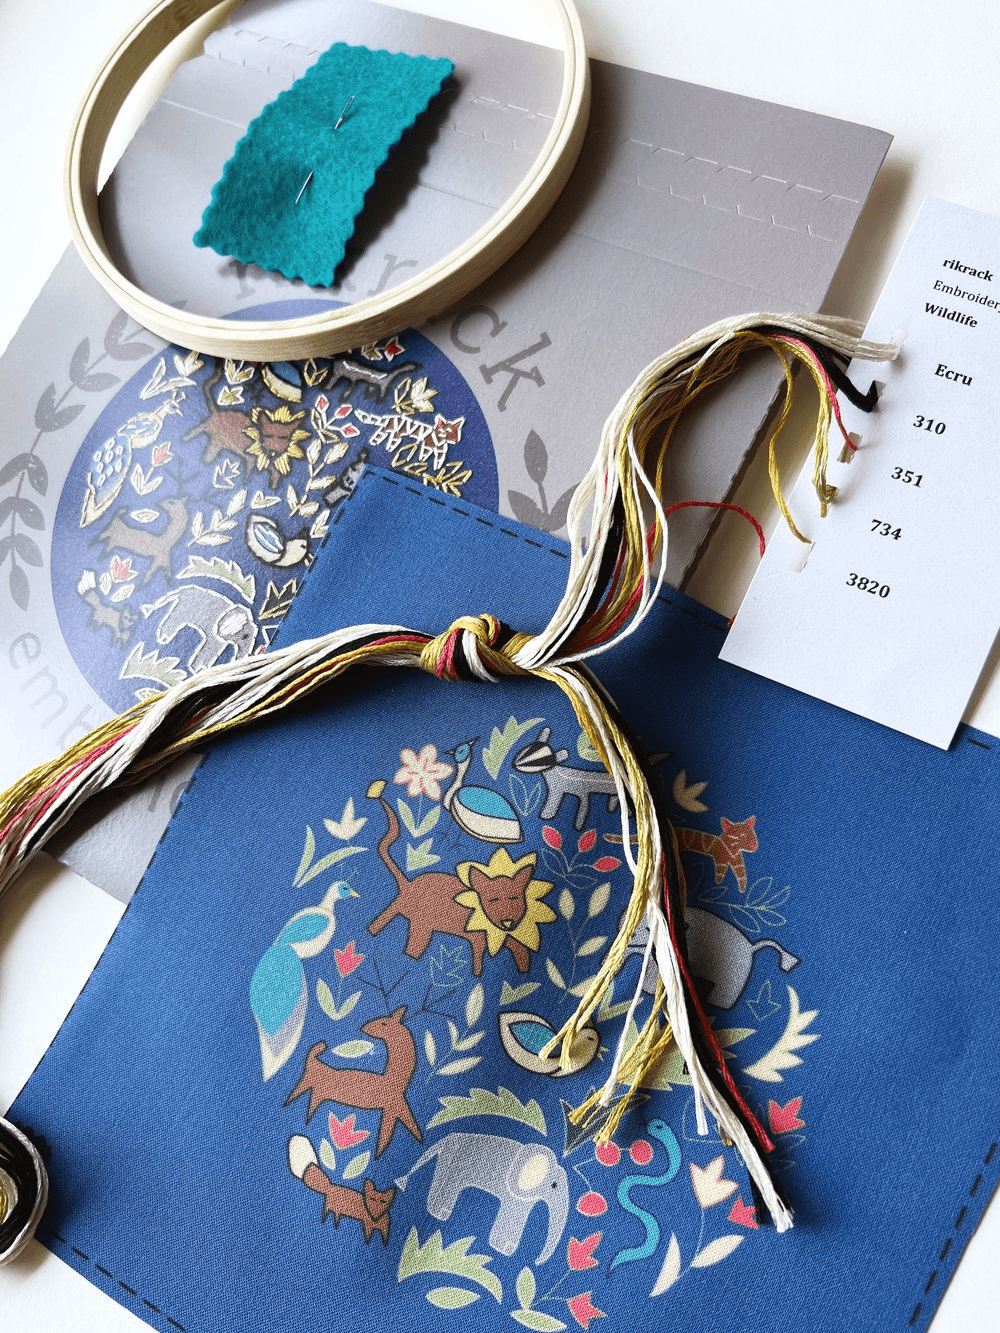 Wildlife - Embroidery Kit - Rikrack